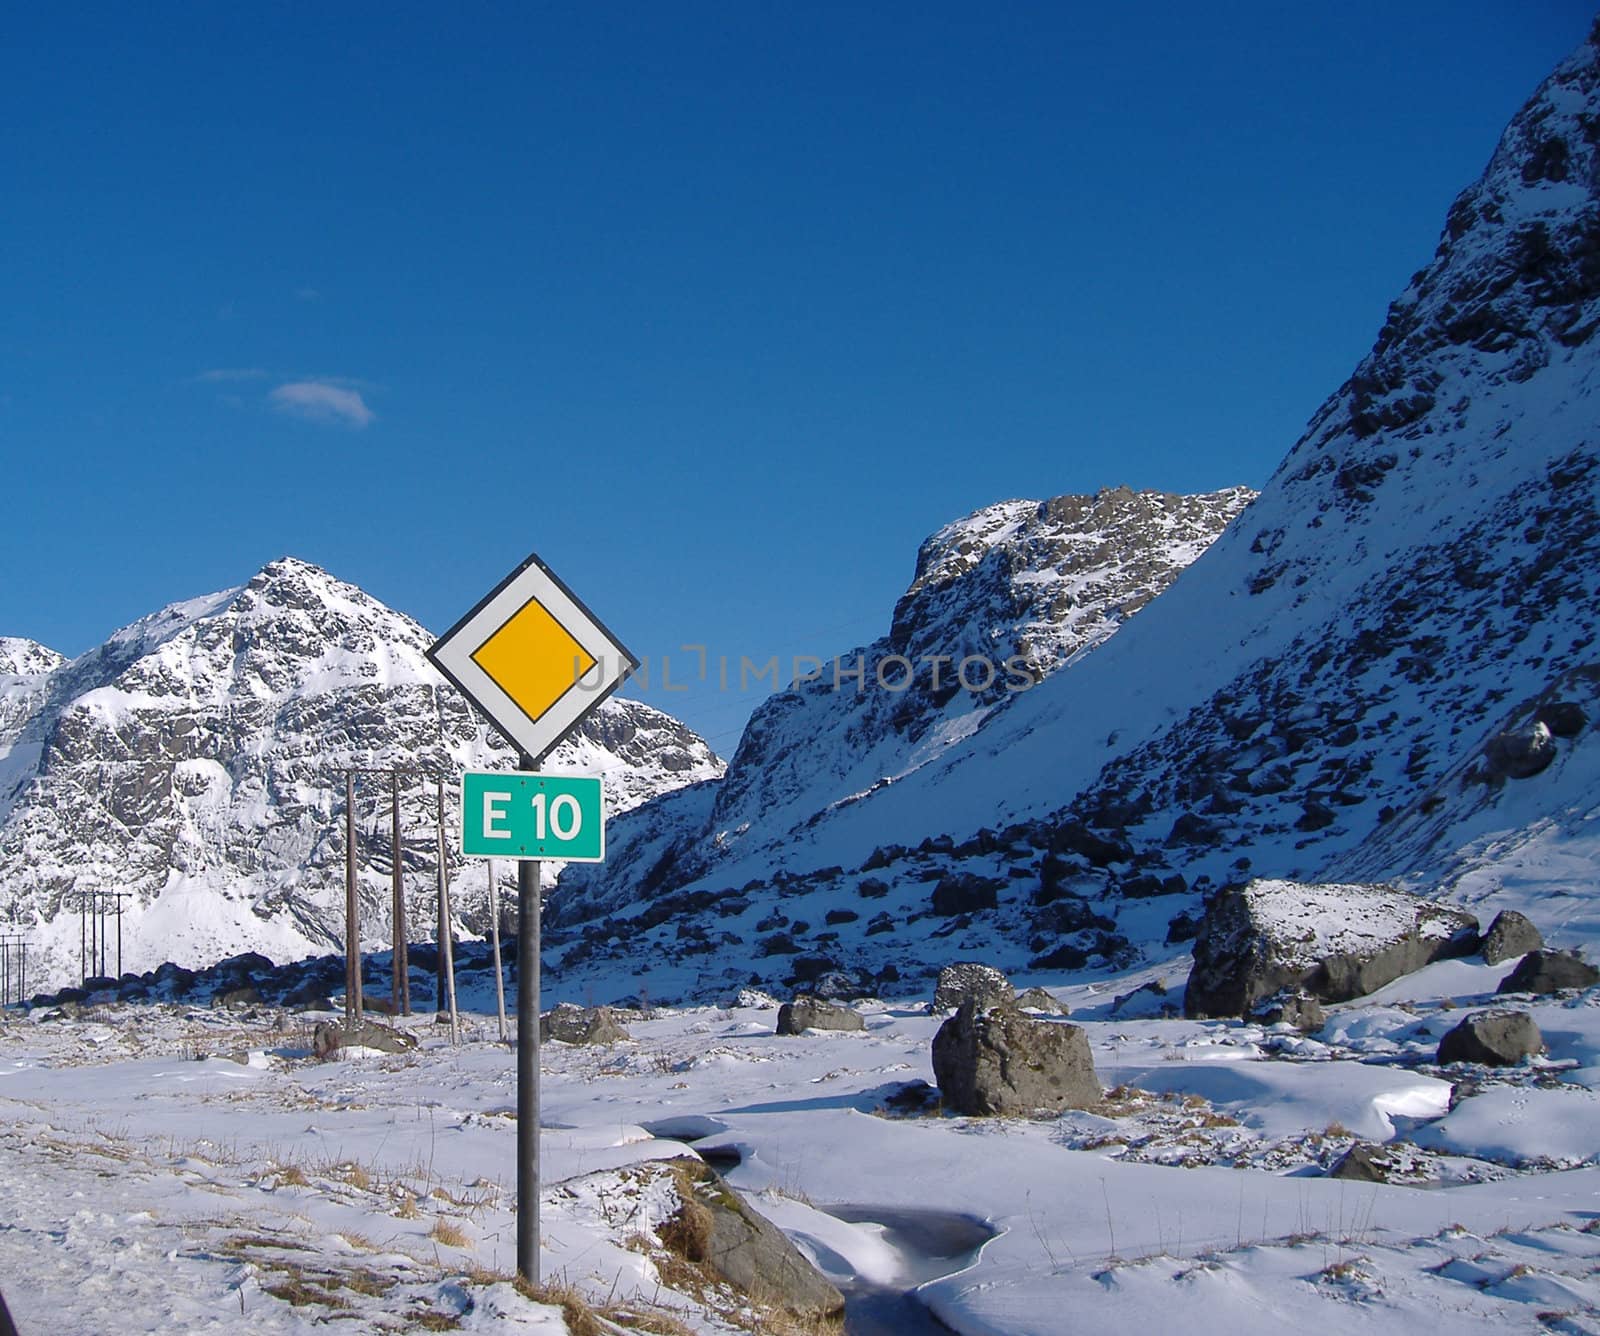 E10, the famous road in Lofoten islands, Norway